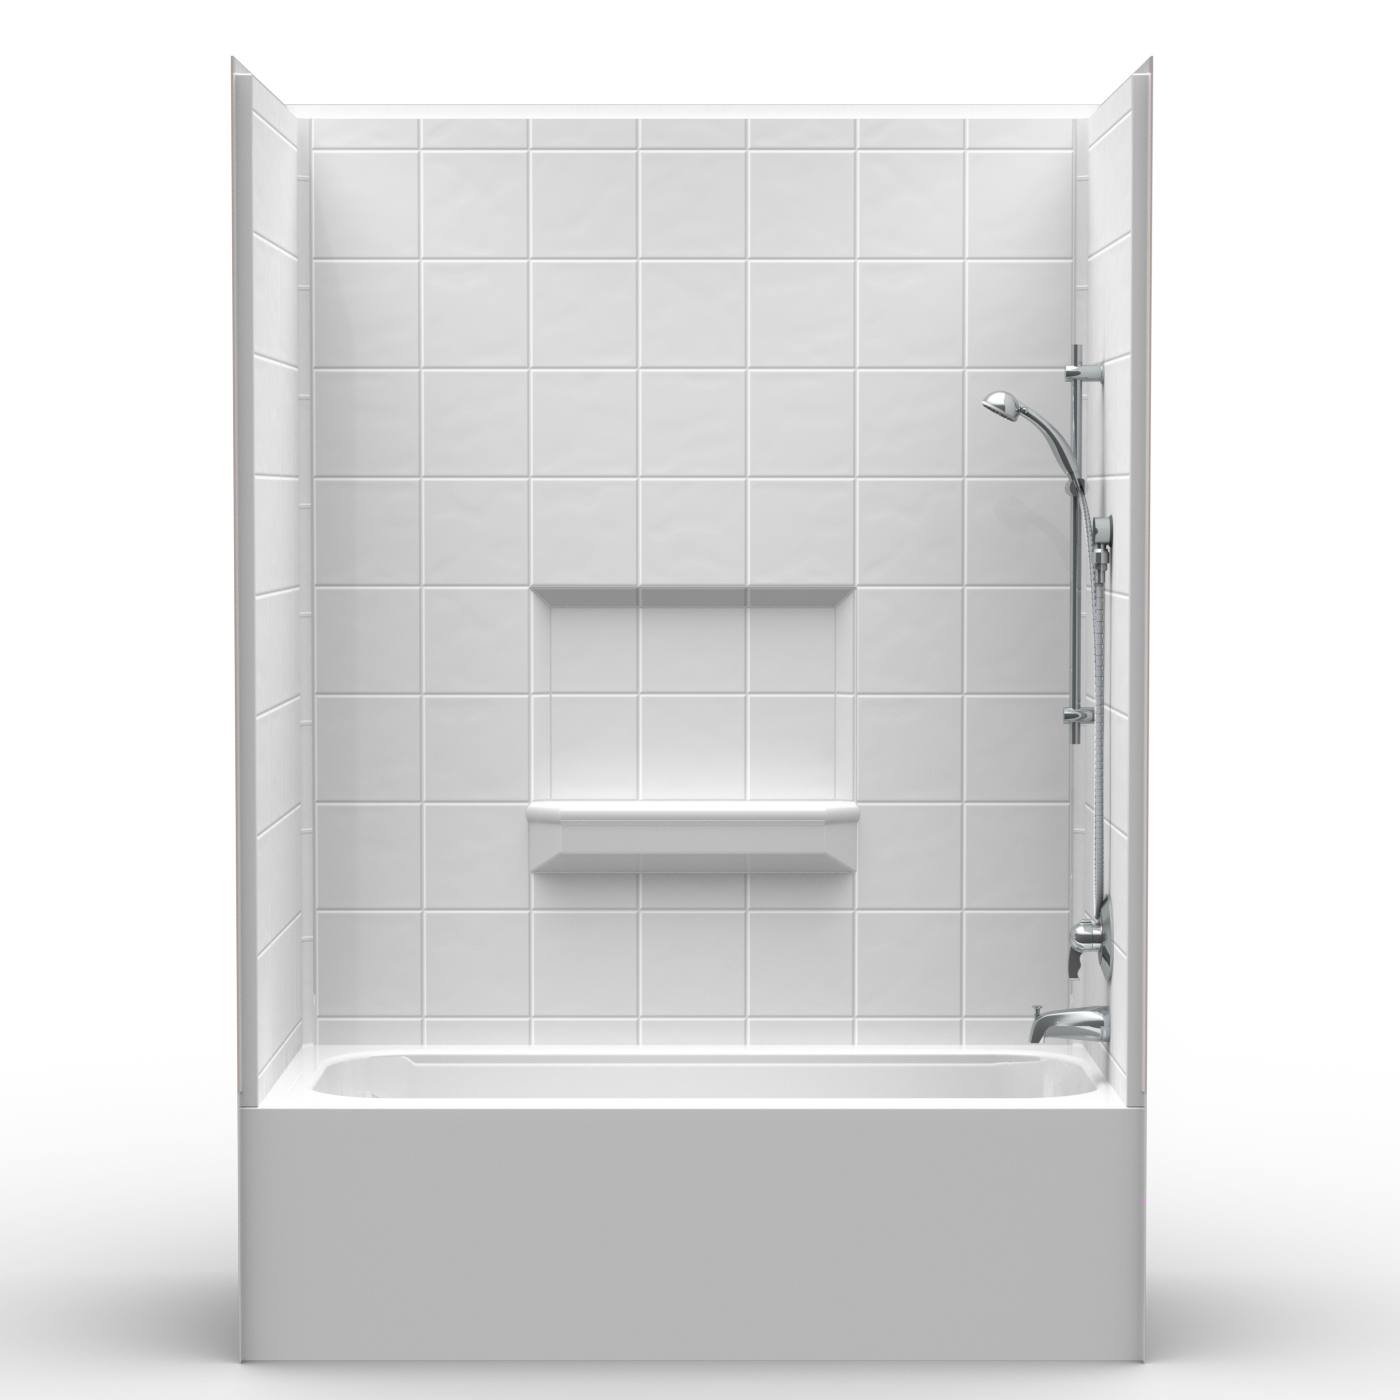 Single Piece Tub Shower 60 X 32 72, Bathtub And Shower Combo Kit